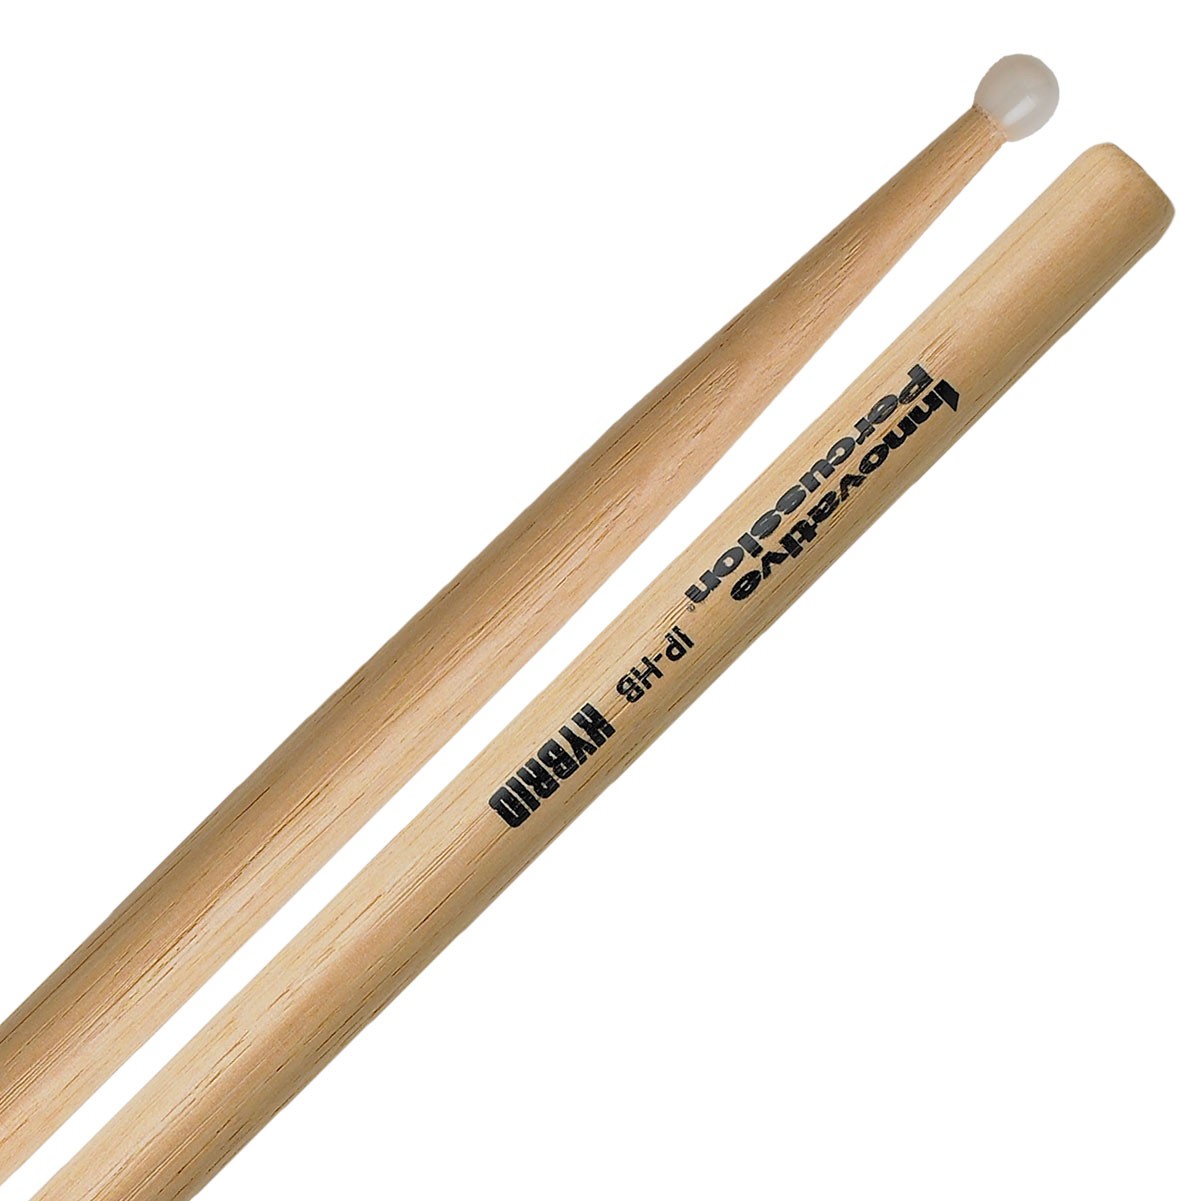 Innovative Percussion HBN Hybrid Innovation Series Drumsticks - Nylon Tip